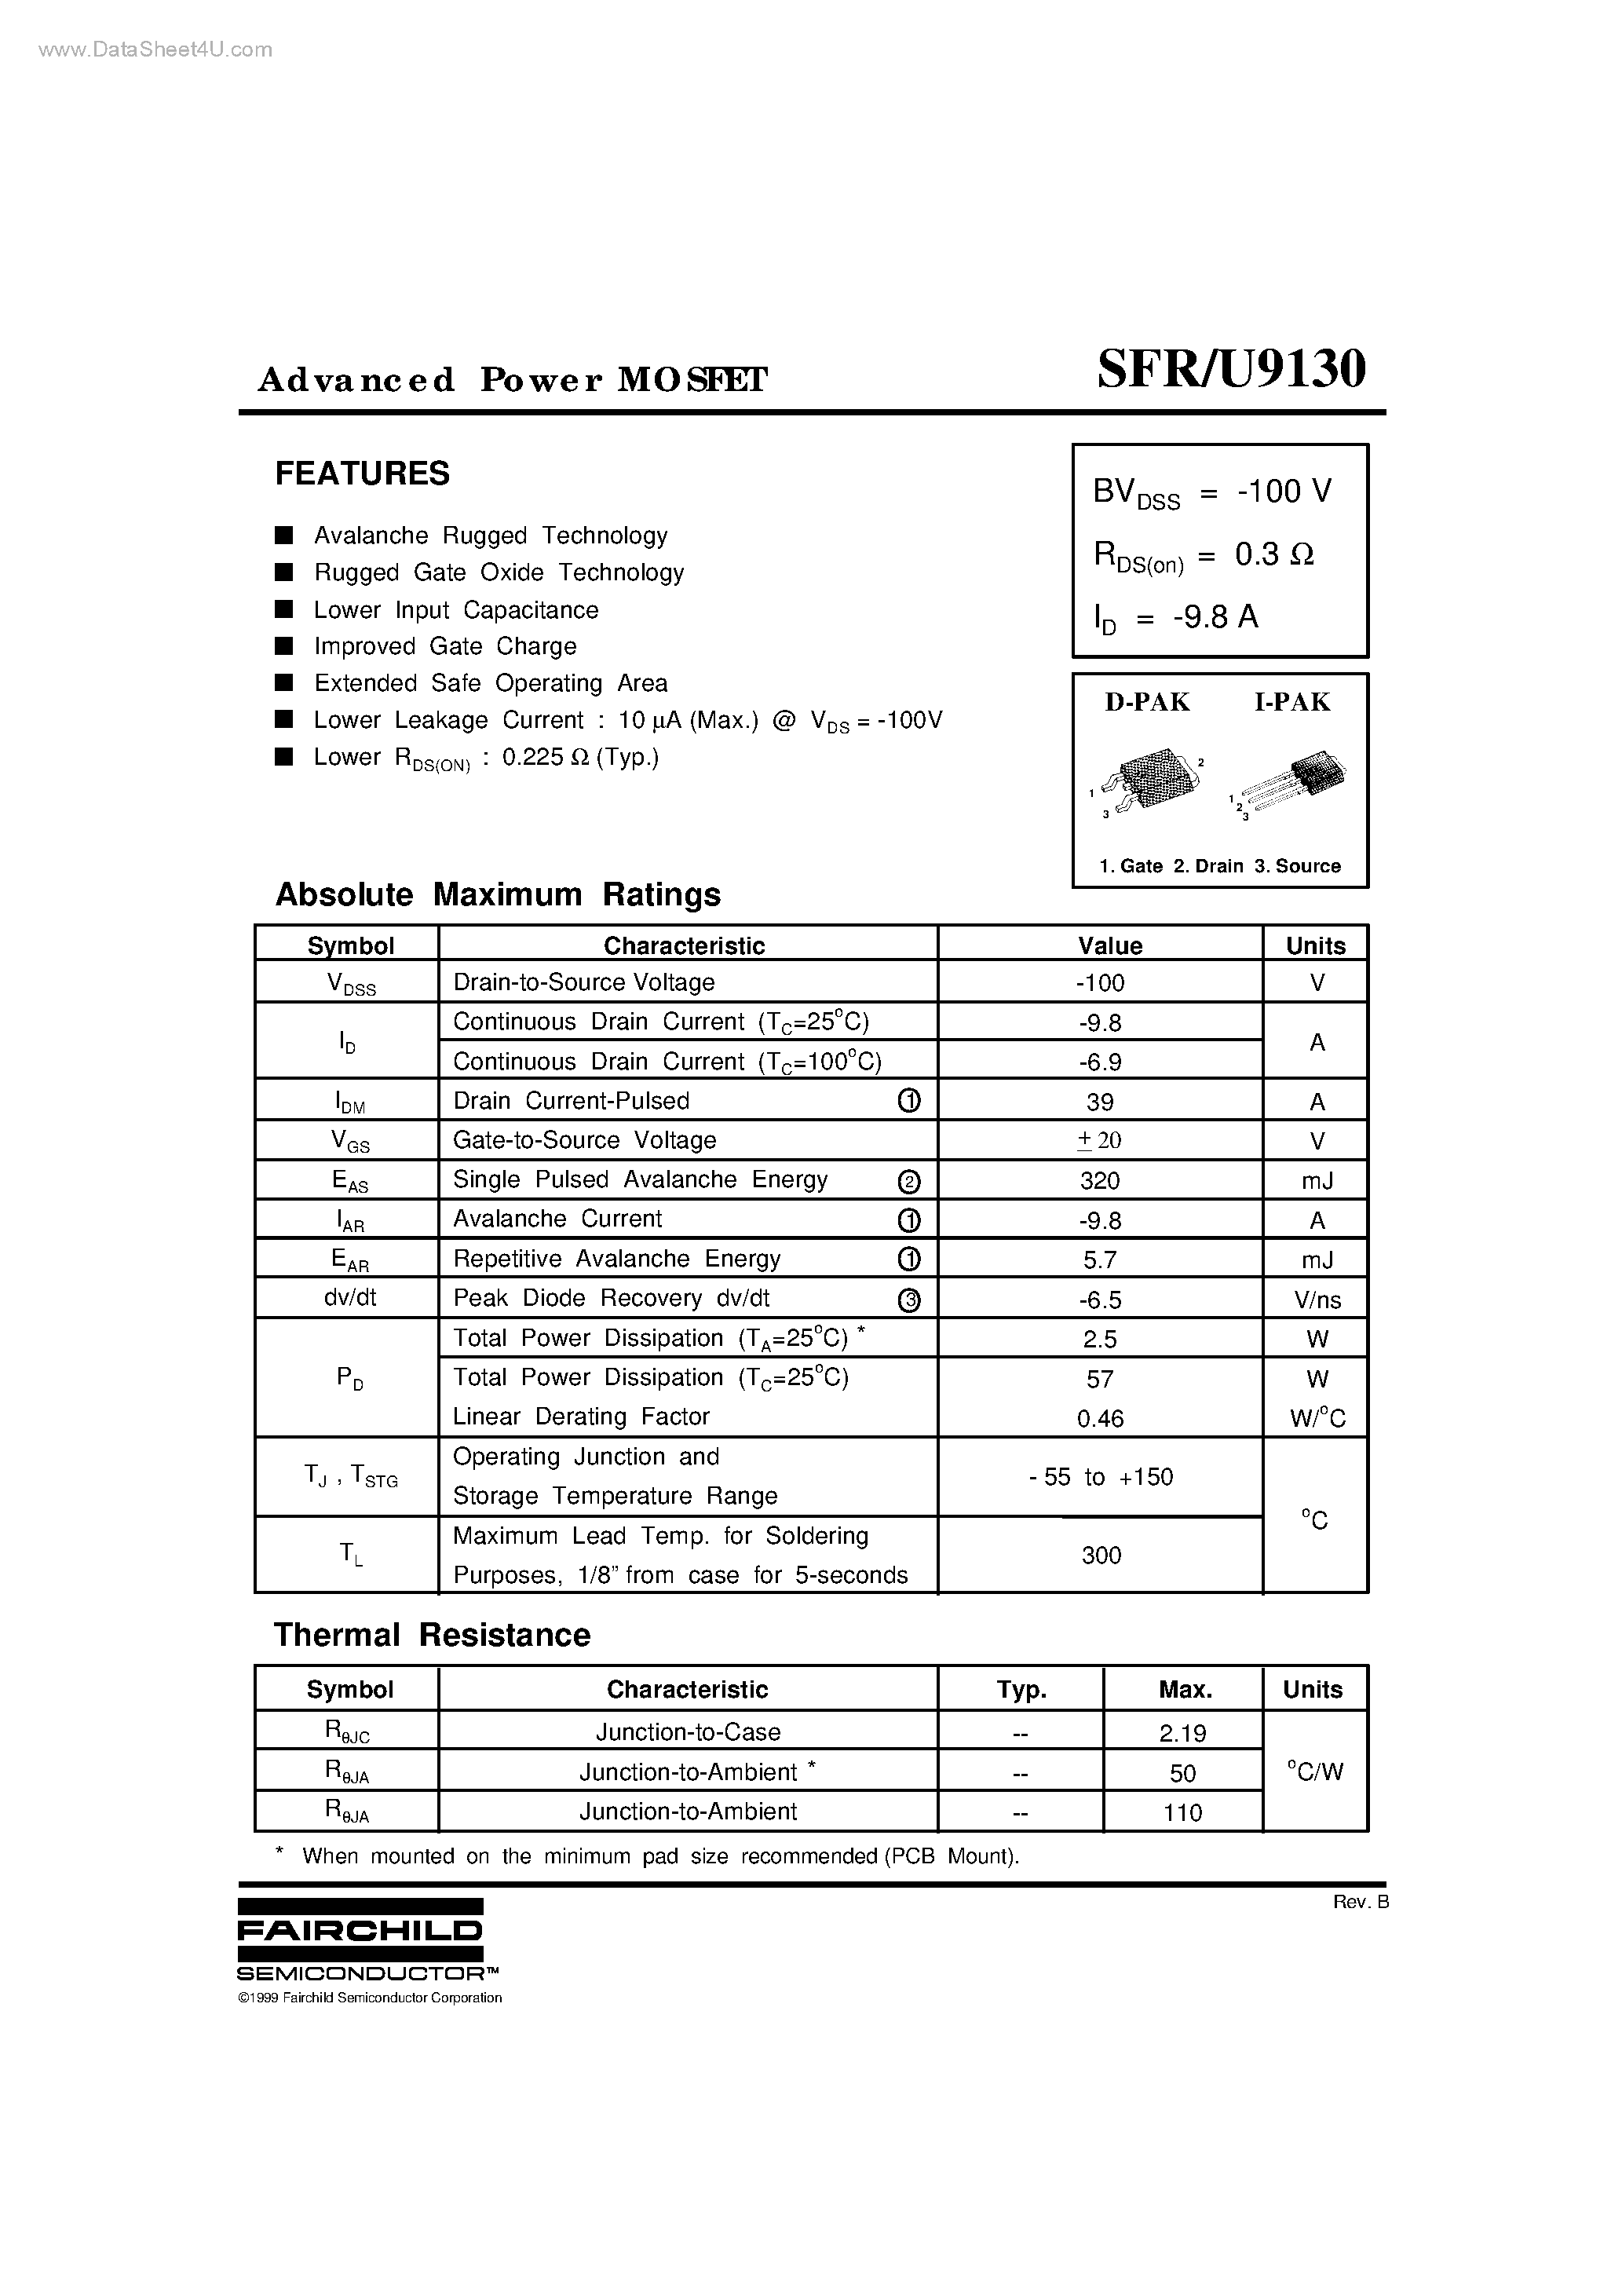 Даташит SFR9130 - Advanced Power MOSFET страница 1